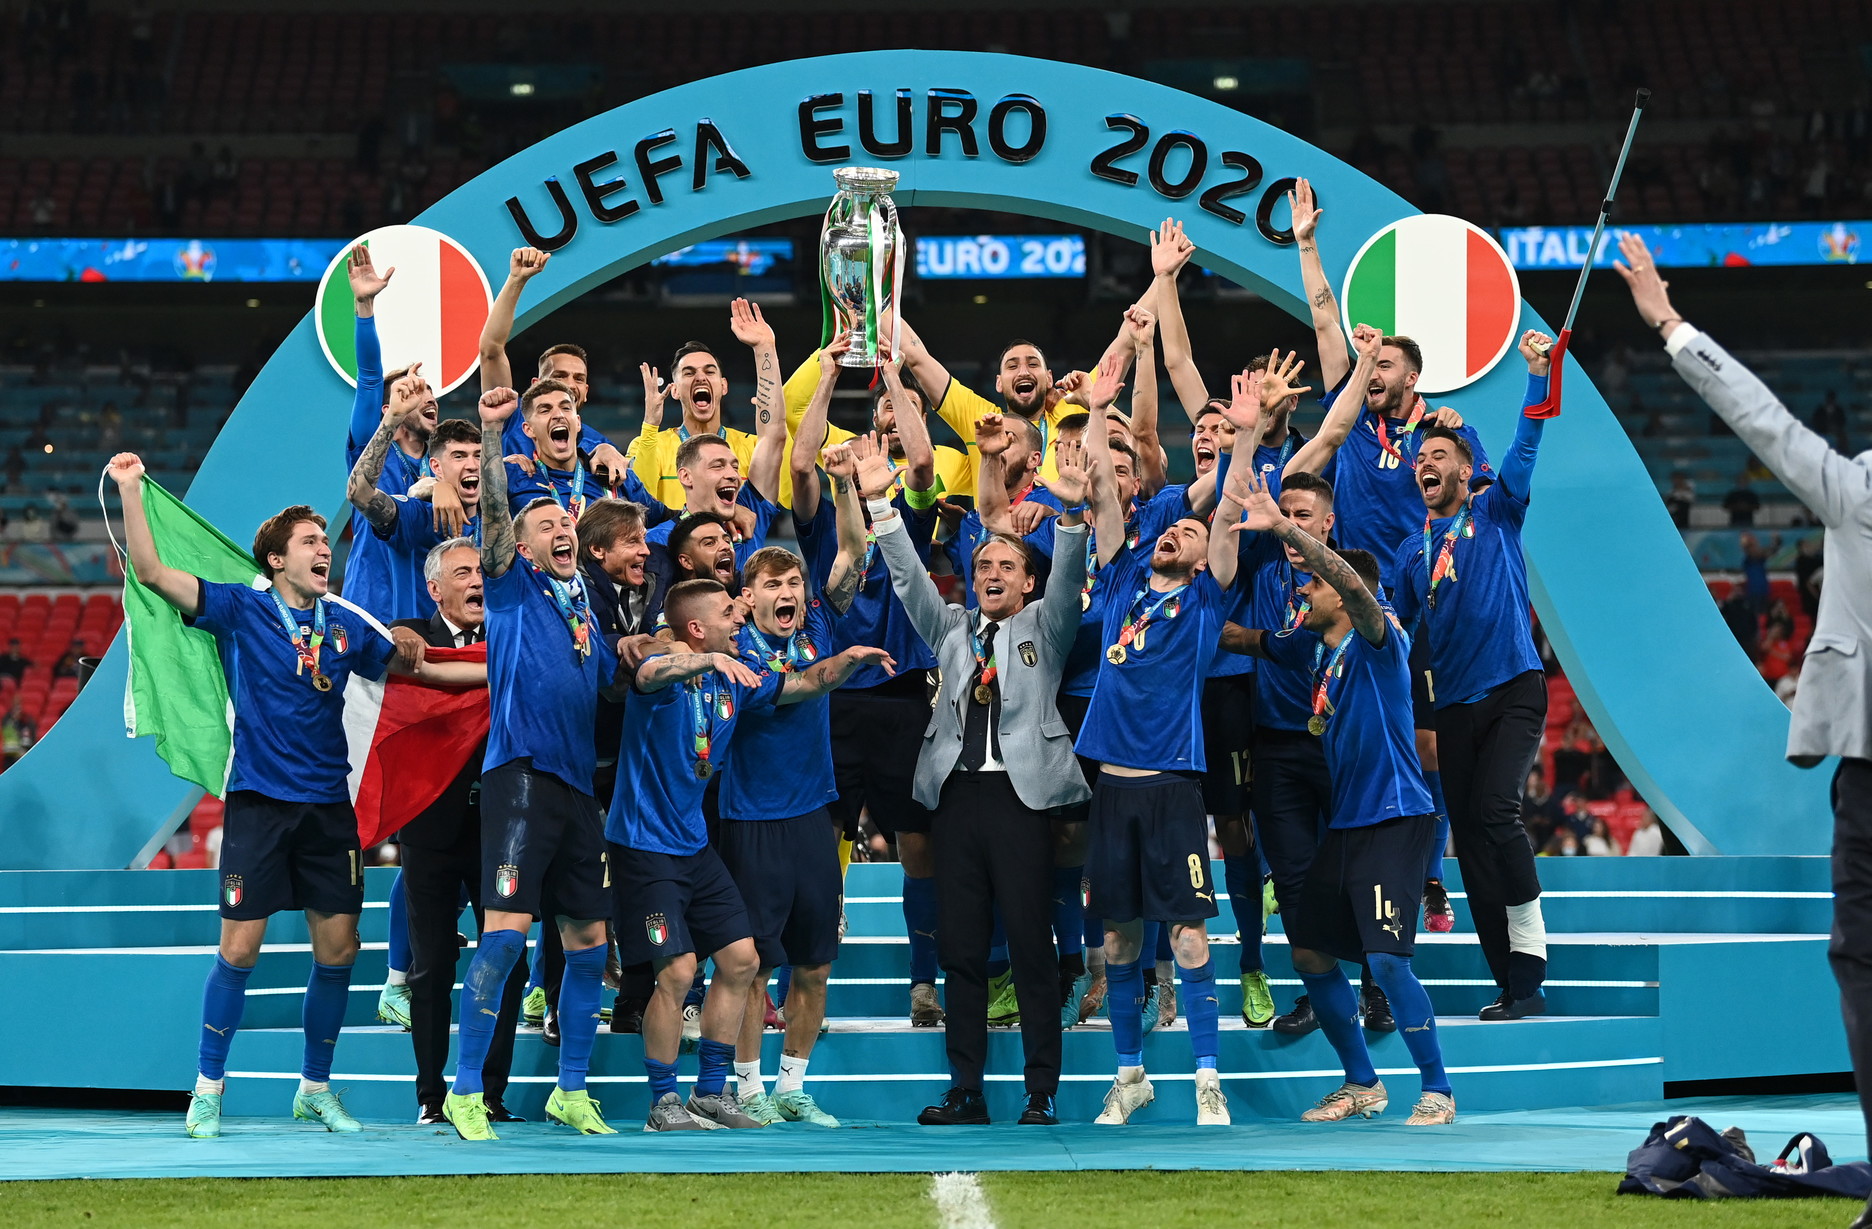 Italy European Soccer Champions